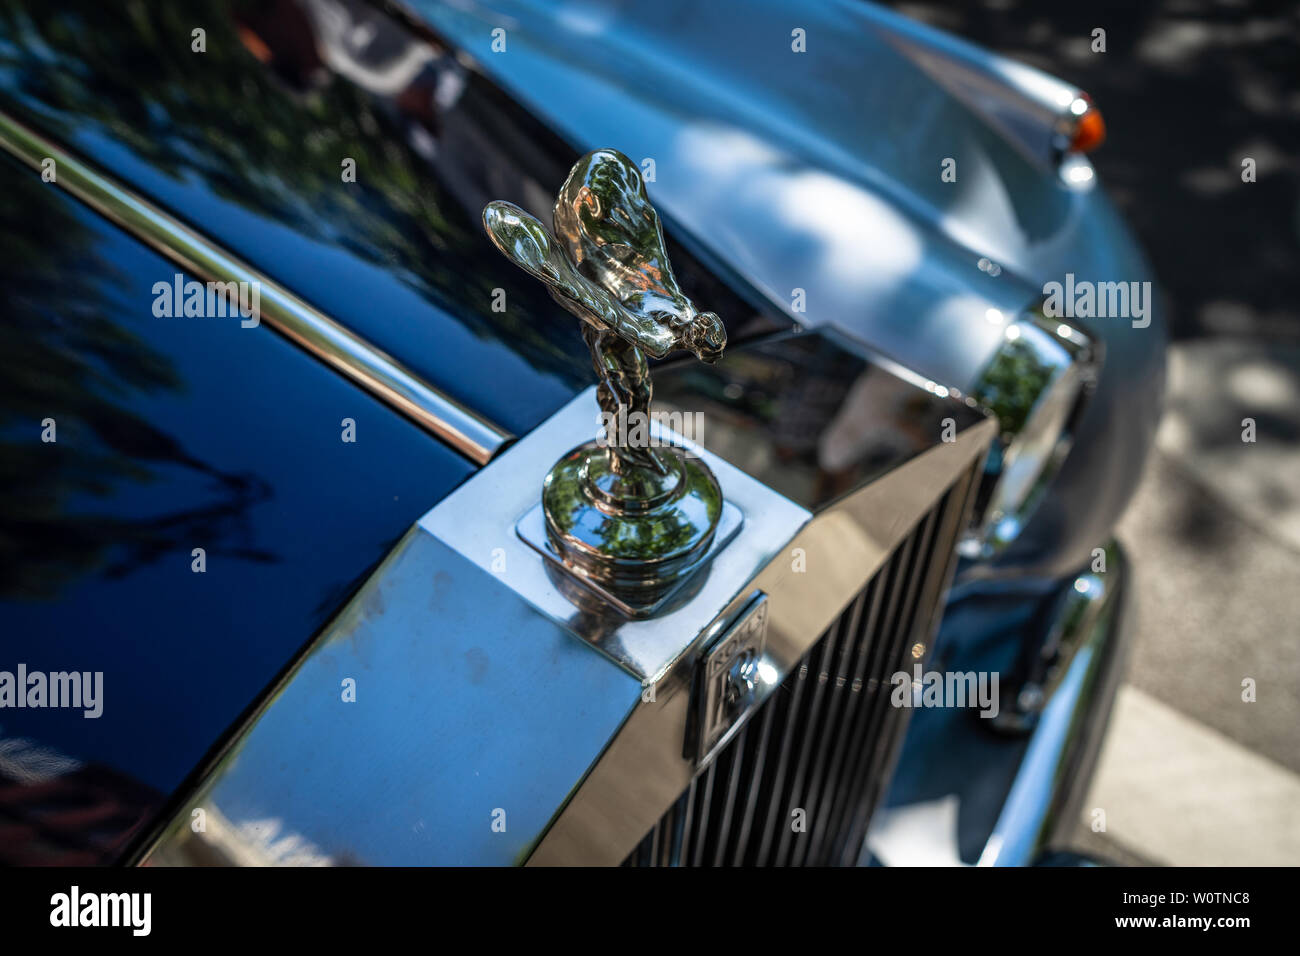 BERLIN - JUNE 09, 2018: The famous emblem 'Spirit of Ecstasy' on the Rolls-Royce luxury car. Classic Days Berlin 2018. Stock Photo